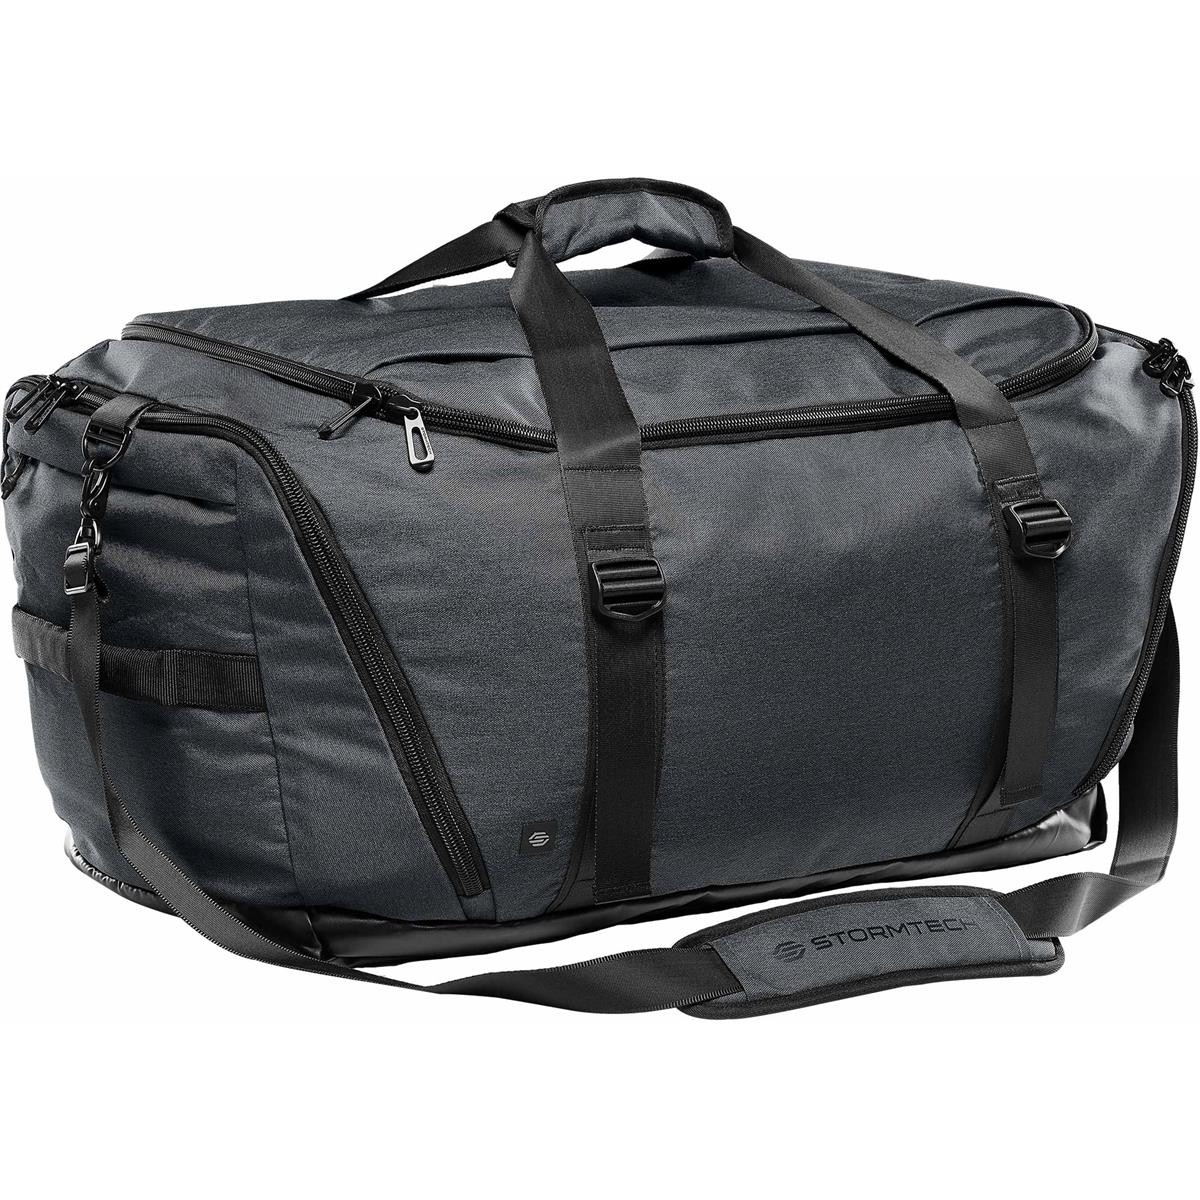 Equinox 80 Duffle Bag - Global CMA